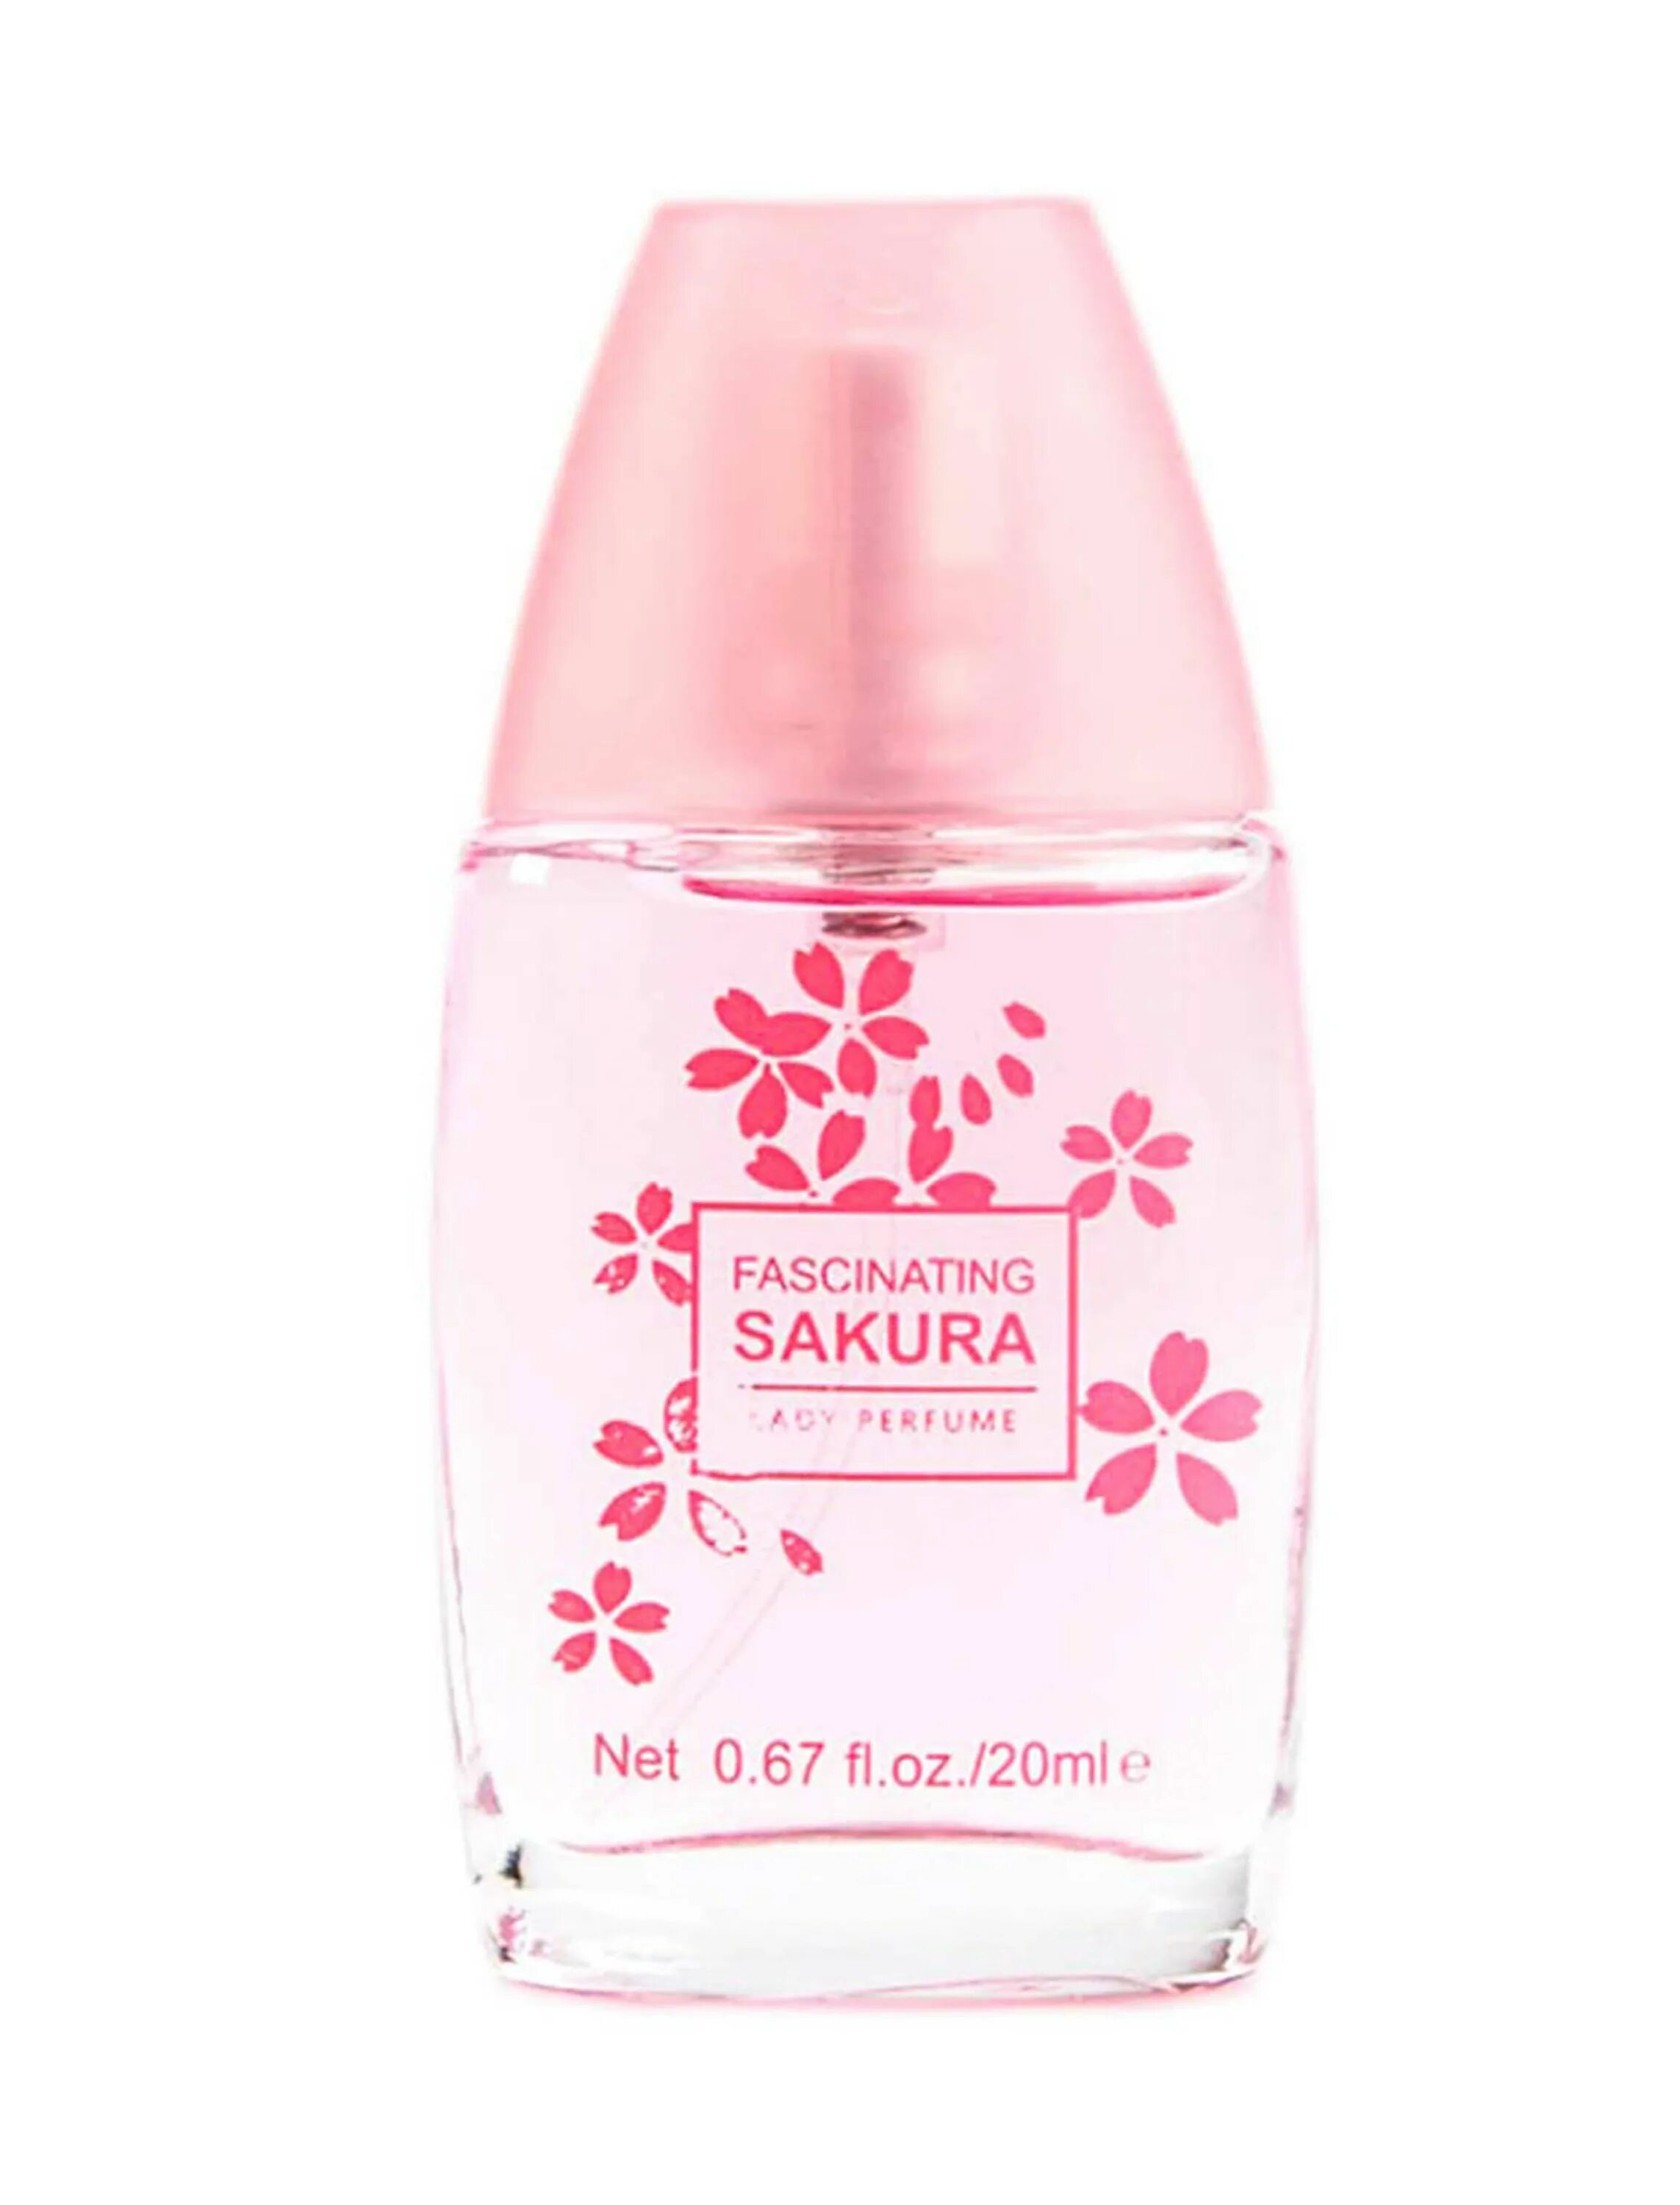 Духи cherry blossom. Miniso духи Sakura. Духи из минисо Сакура. Miniso fascinating Sakura Lady Perfume. Туалетная вода Сакура Matsushima.